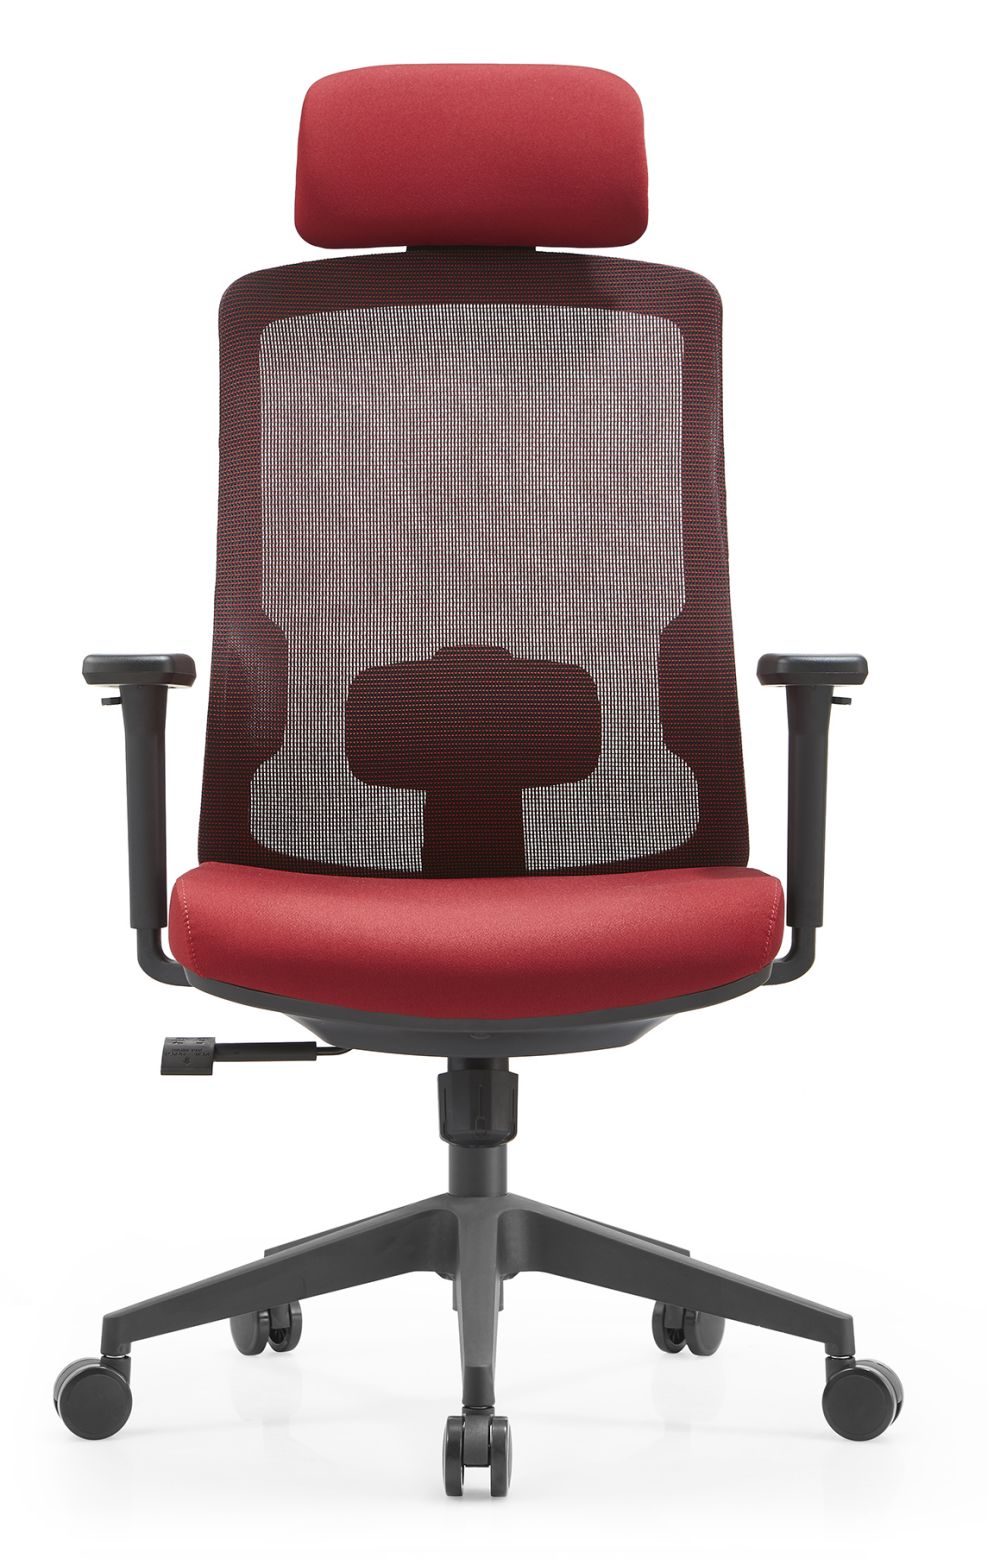 Gerieflike ergonomiese kantoorstoel (1)